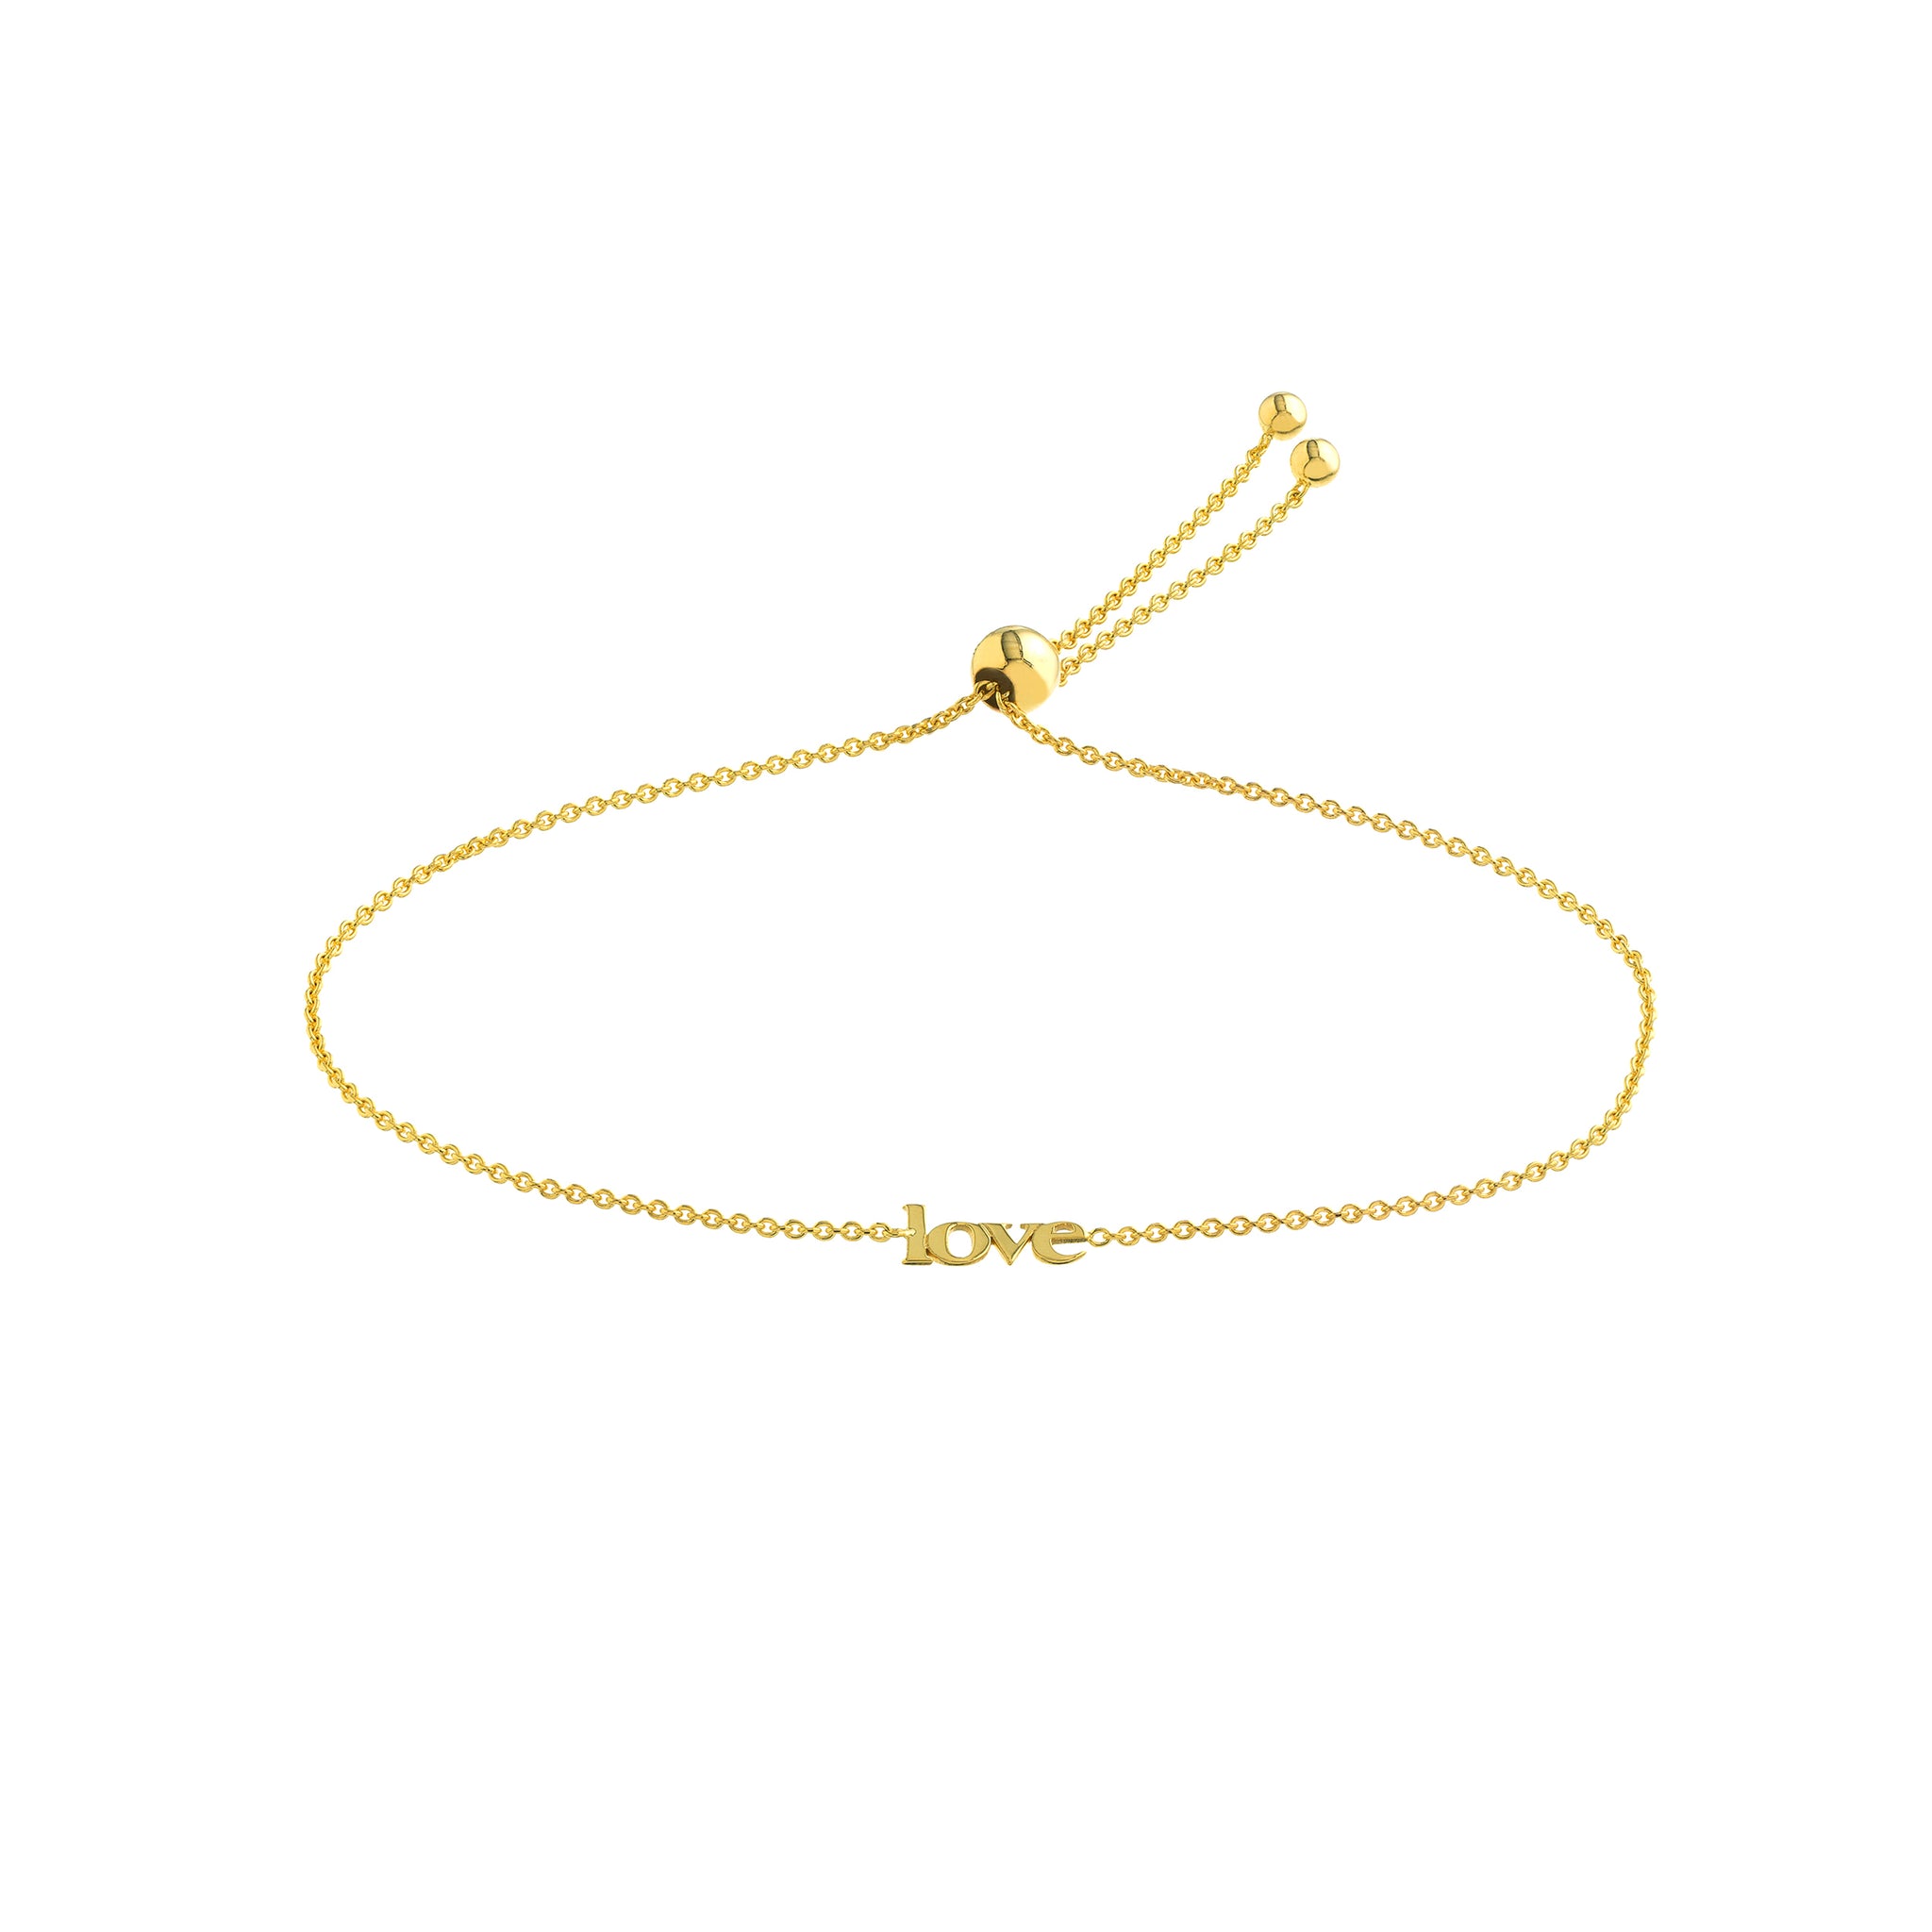 Hemsleys Collection 14K Yellow Gold Love Bolo Bracelet